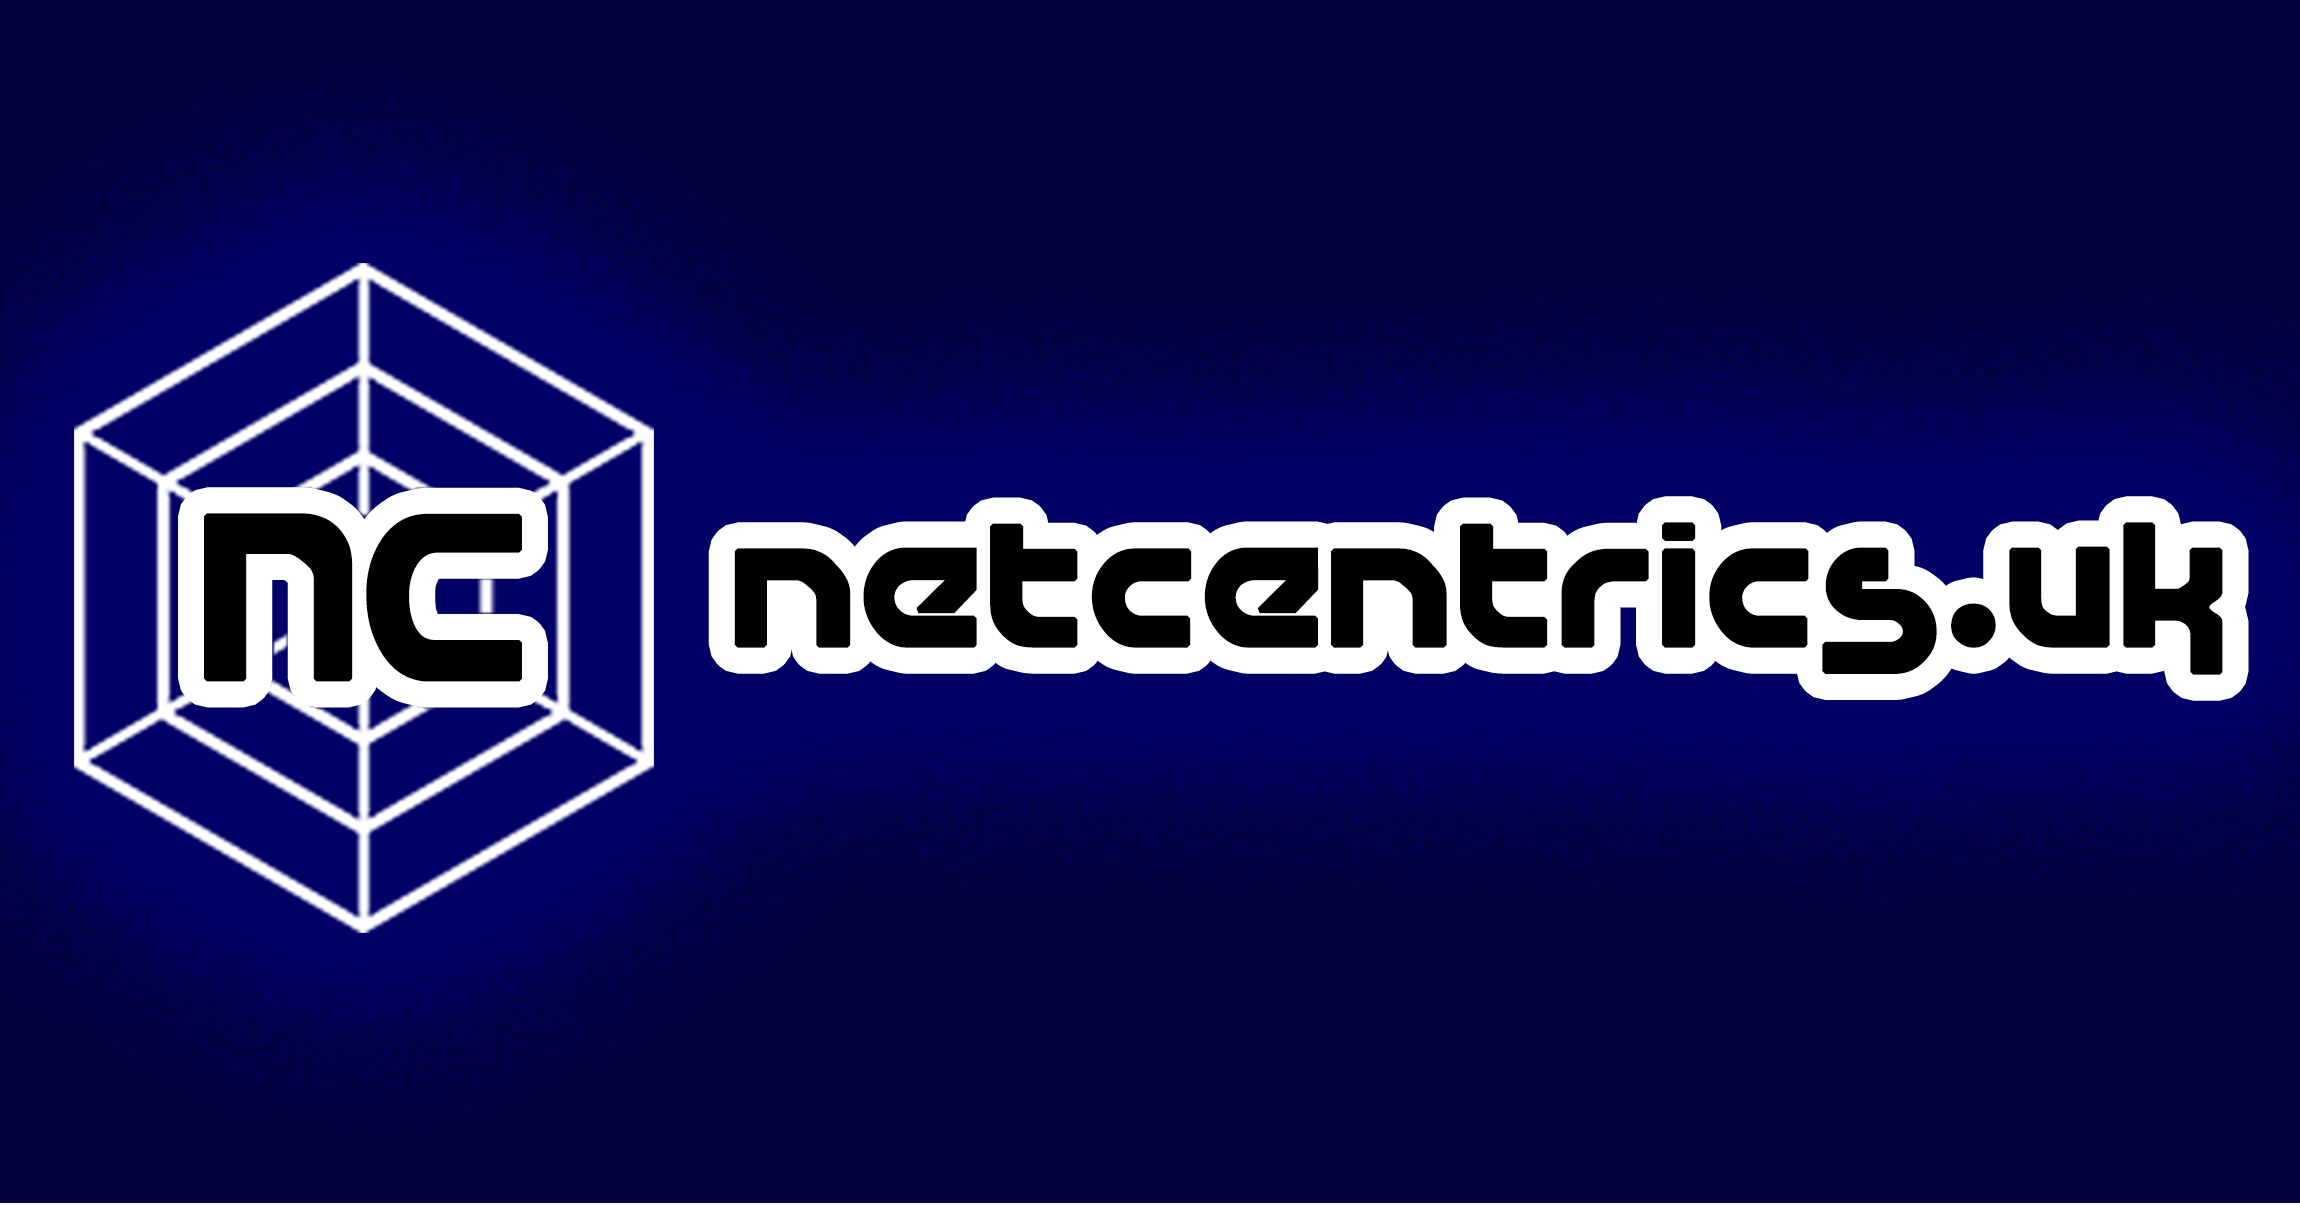 (c) Netcentrics.co.uk